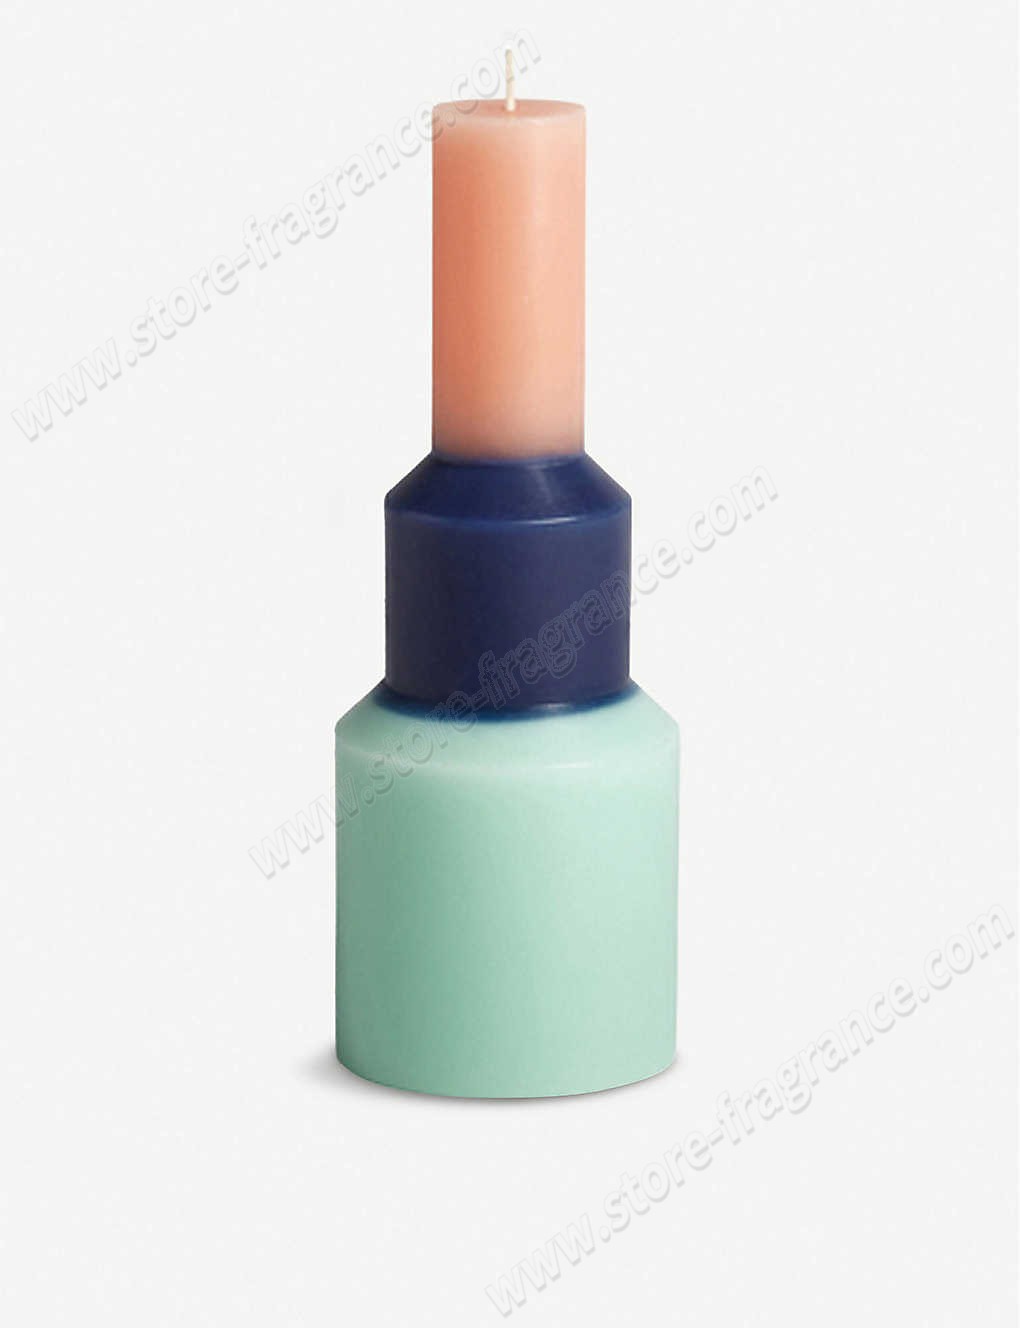 HAY/Medium Pillar candle 25cm ✿ Discount Store - HAY/Medium Pillar candle 25cm ✿ Discount Store